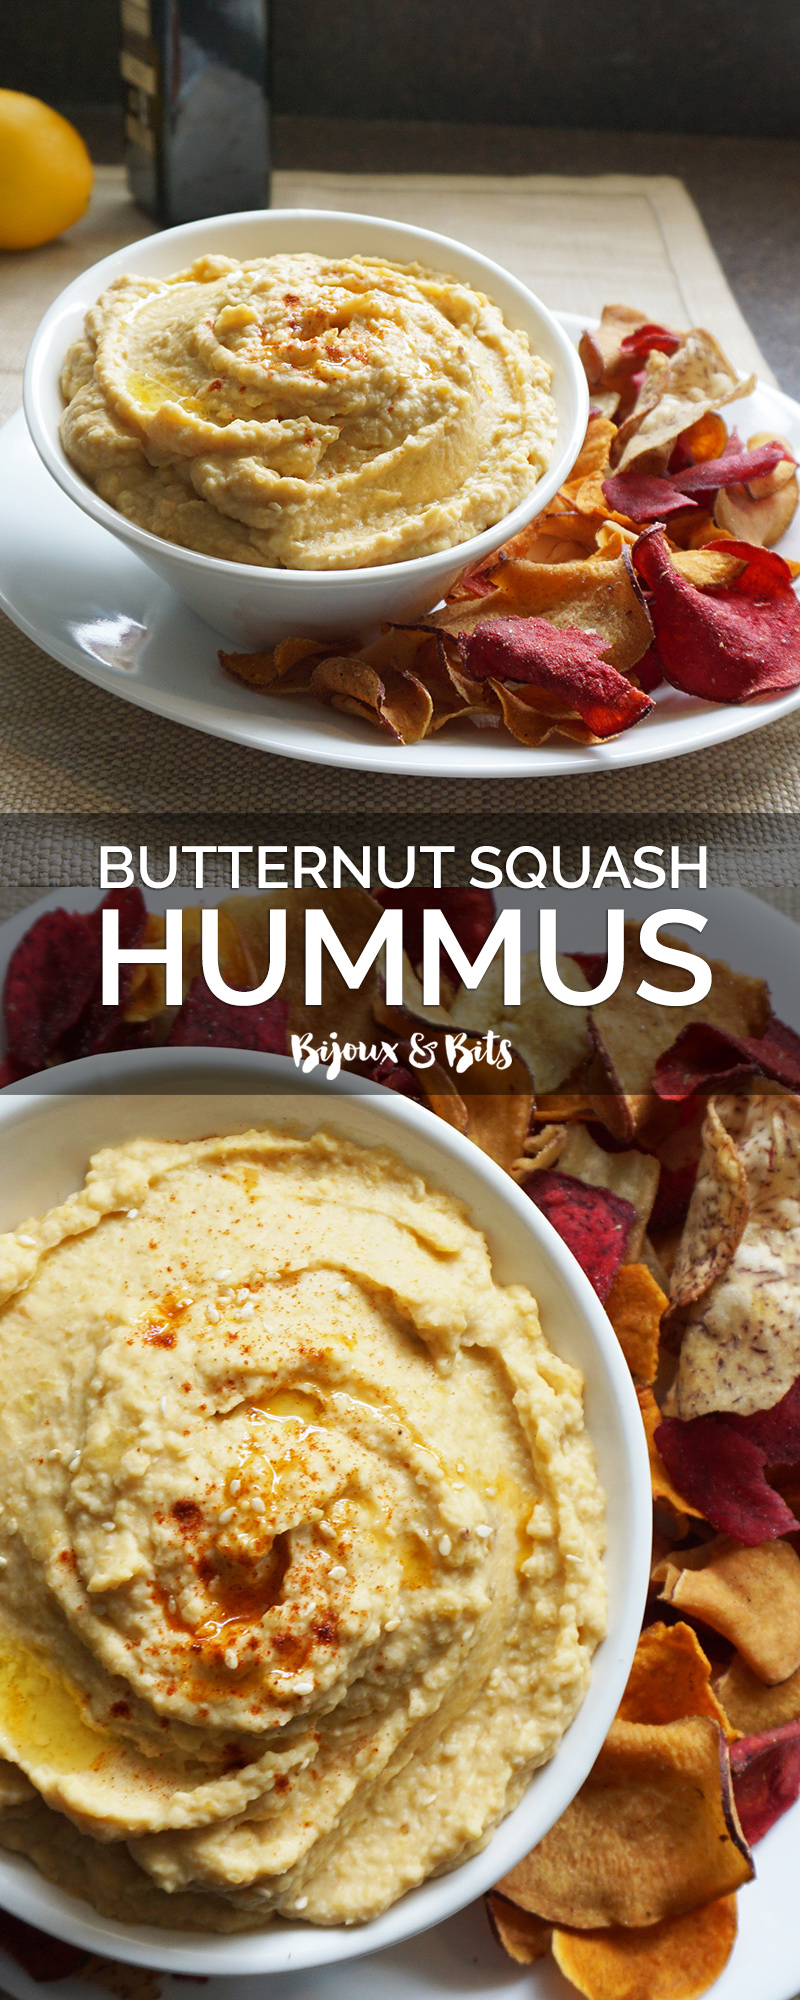 Butternut squash hummus recipe from @bijouxandbits